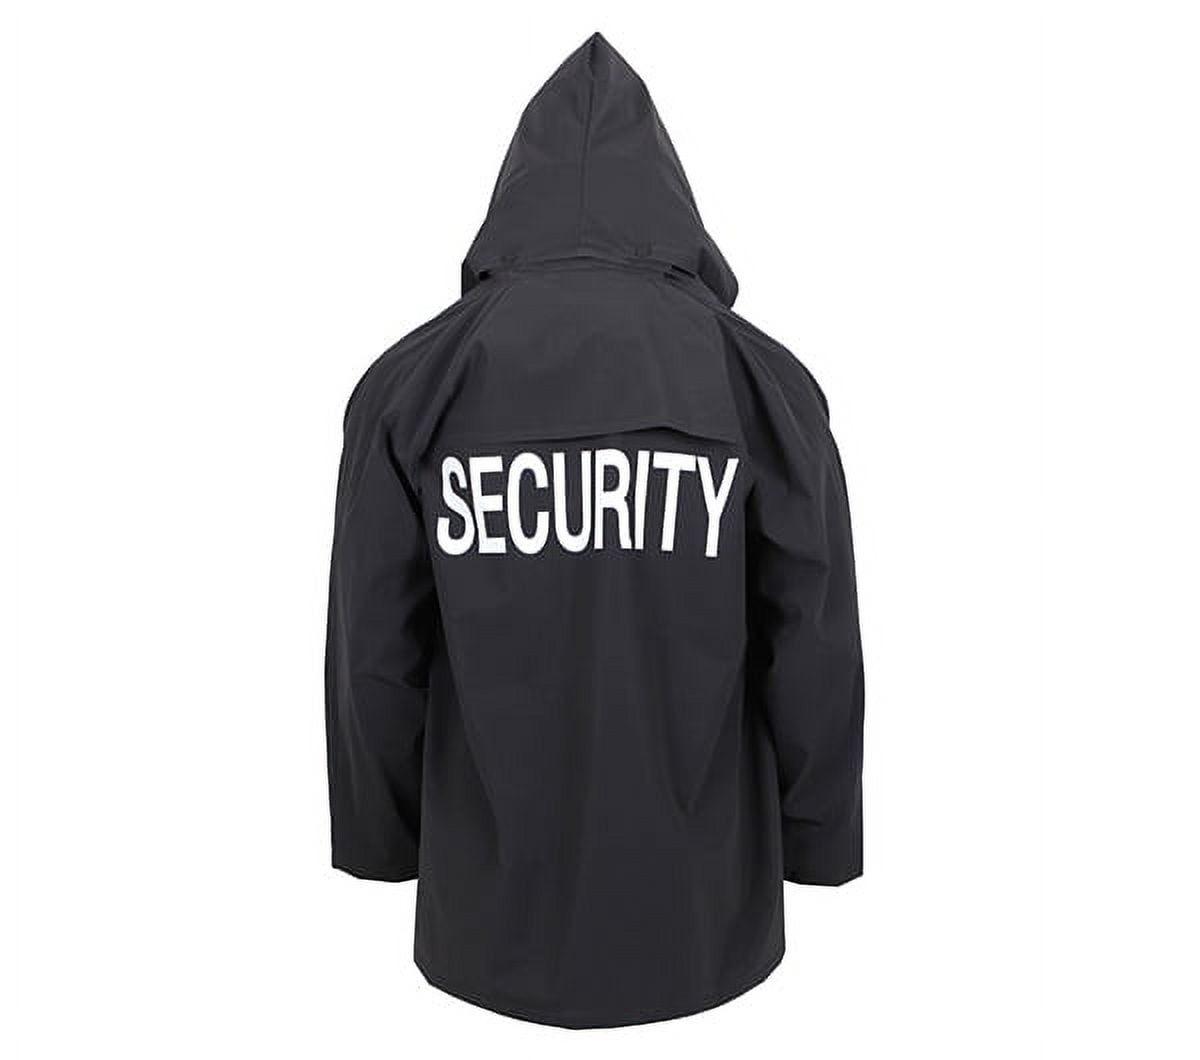 Rothco Black Security Rain Jacket - 36651 - Medium 